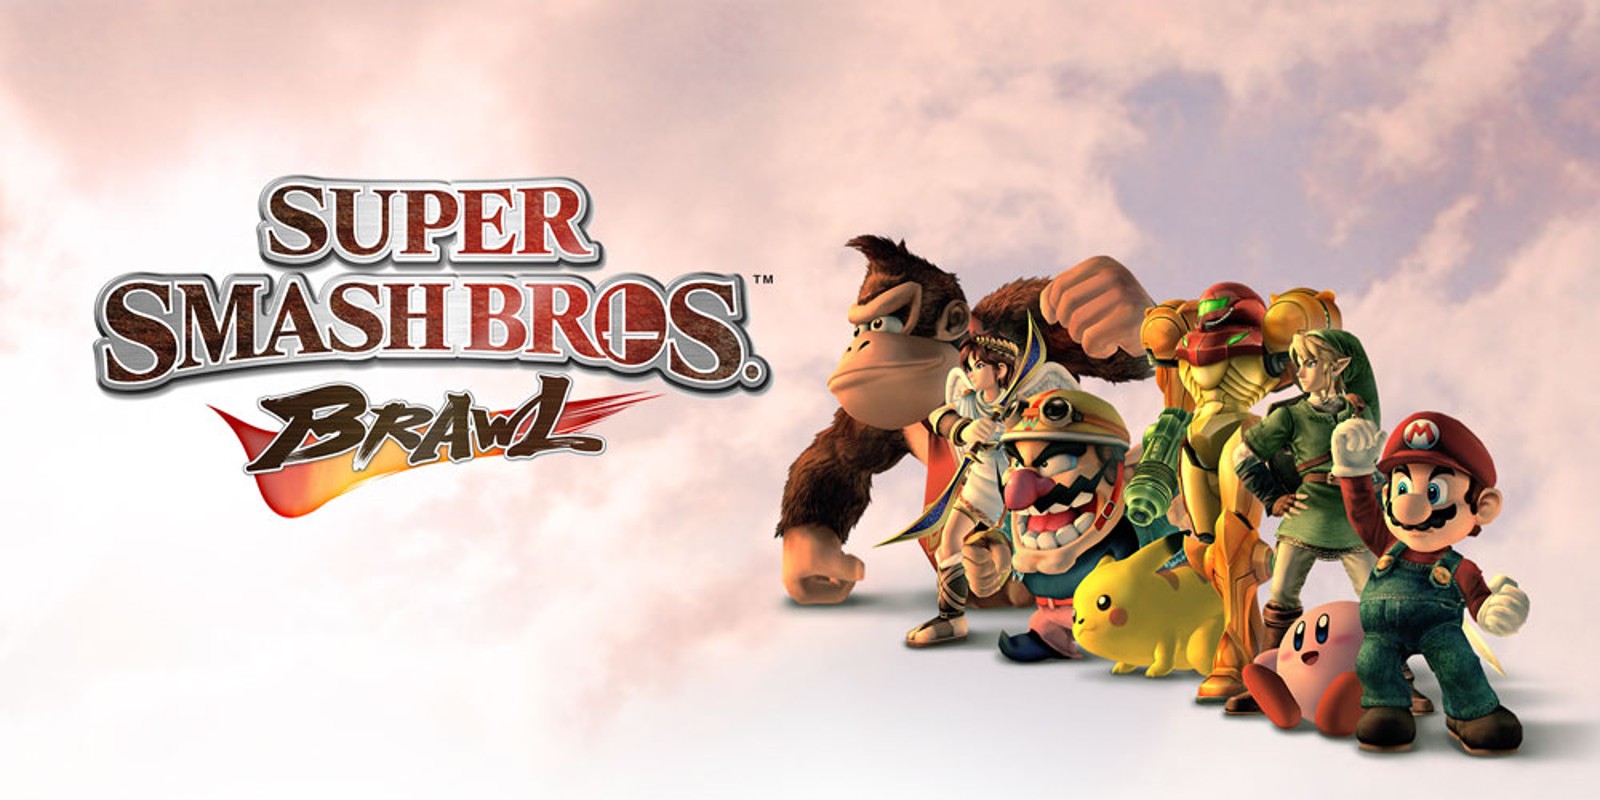 Super Smash Bros Wii Super Smash Bros. Brawl | Wii | Games | Nintendo